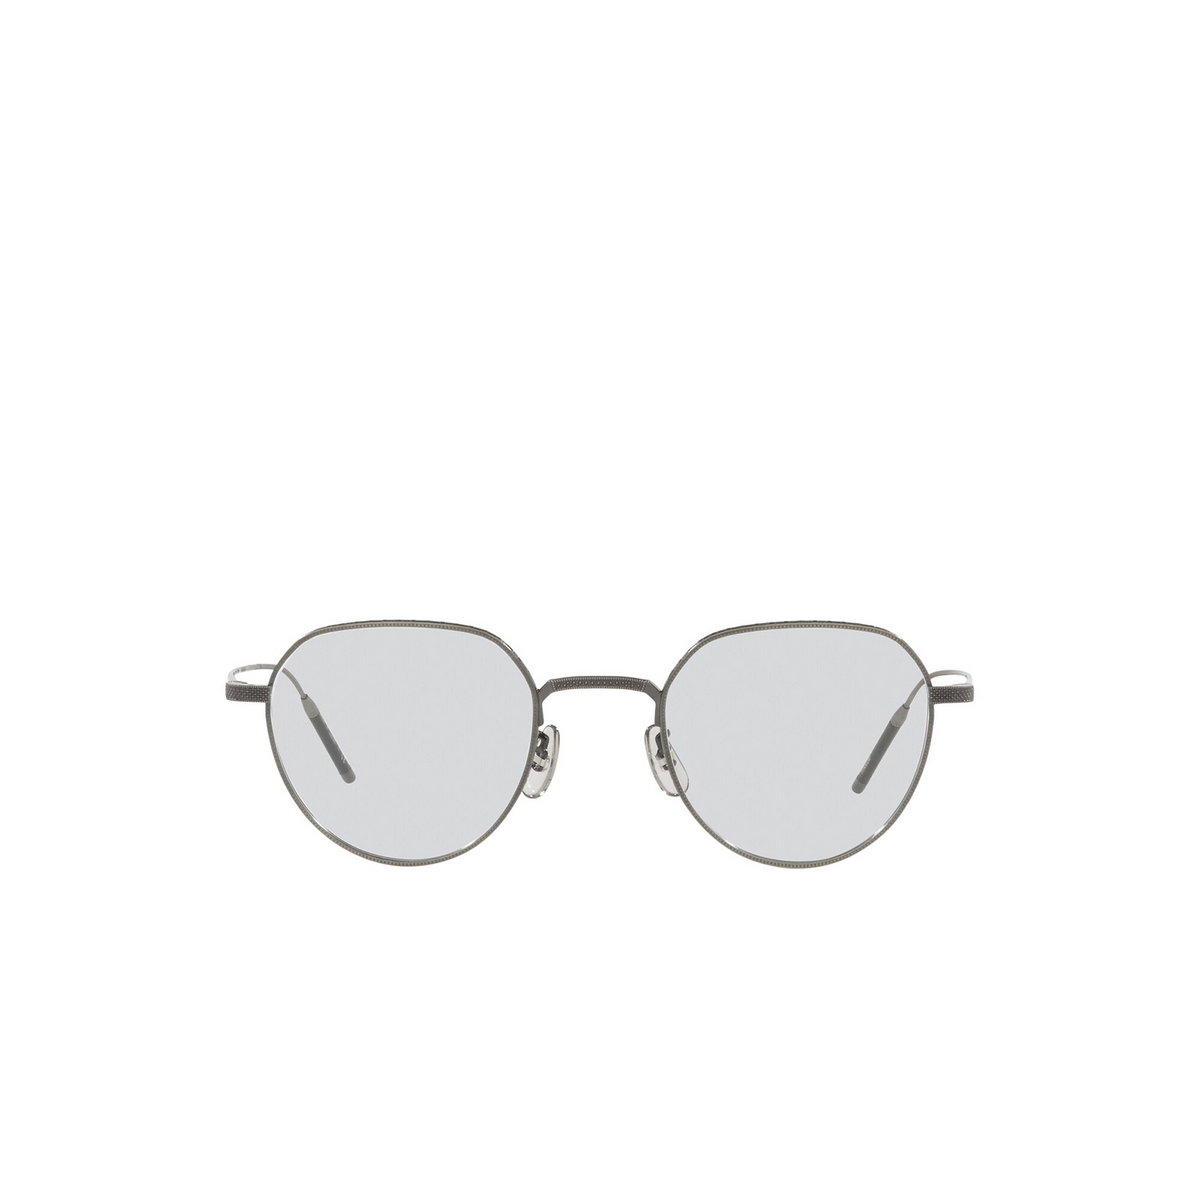 Oliver Peoples TK-4 Eyeglasses 5076 Pewter - front view